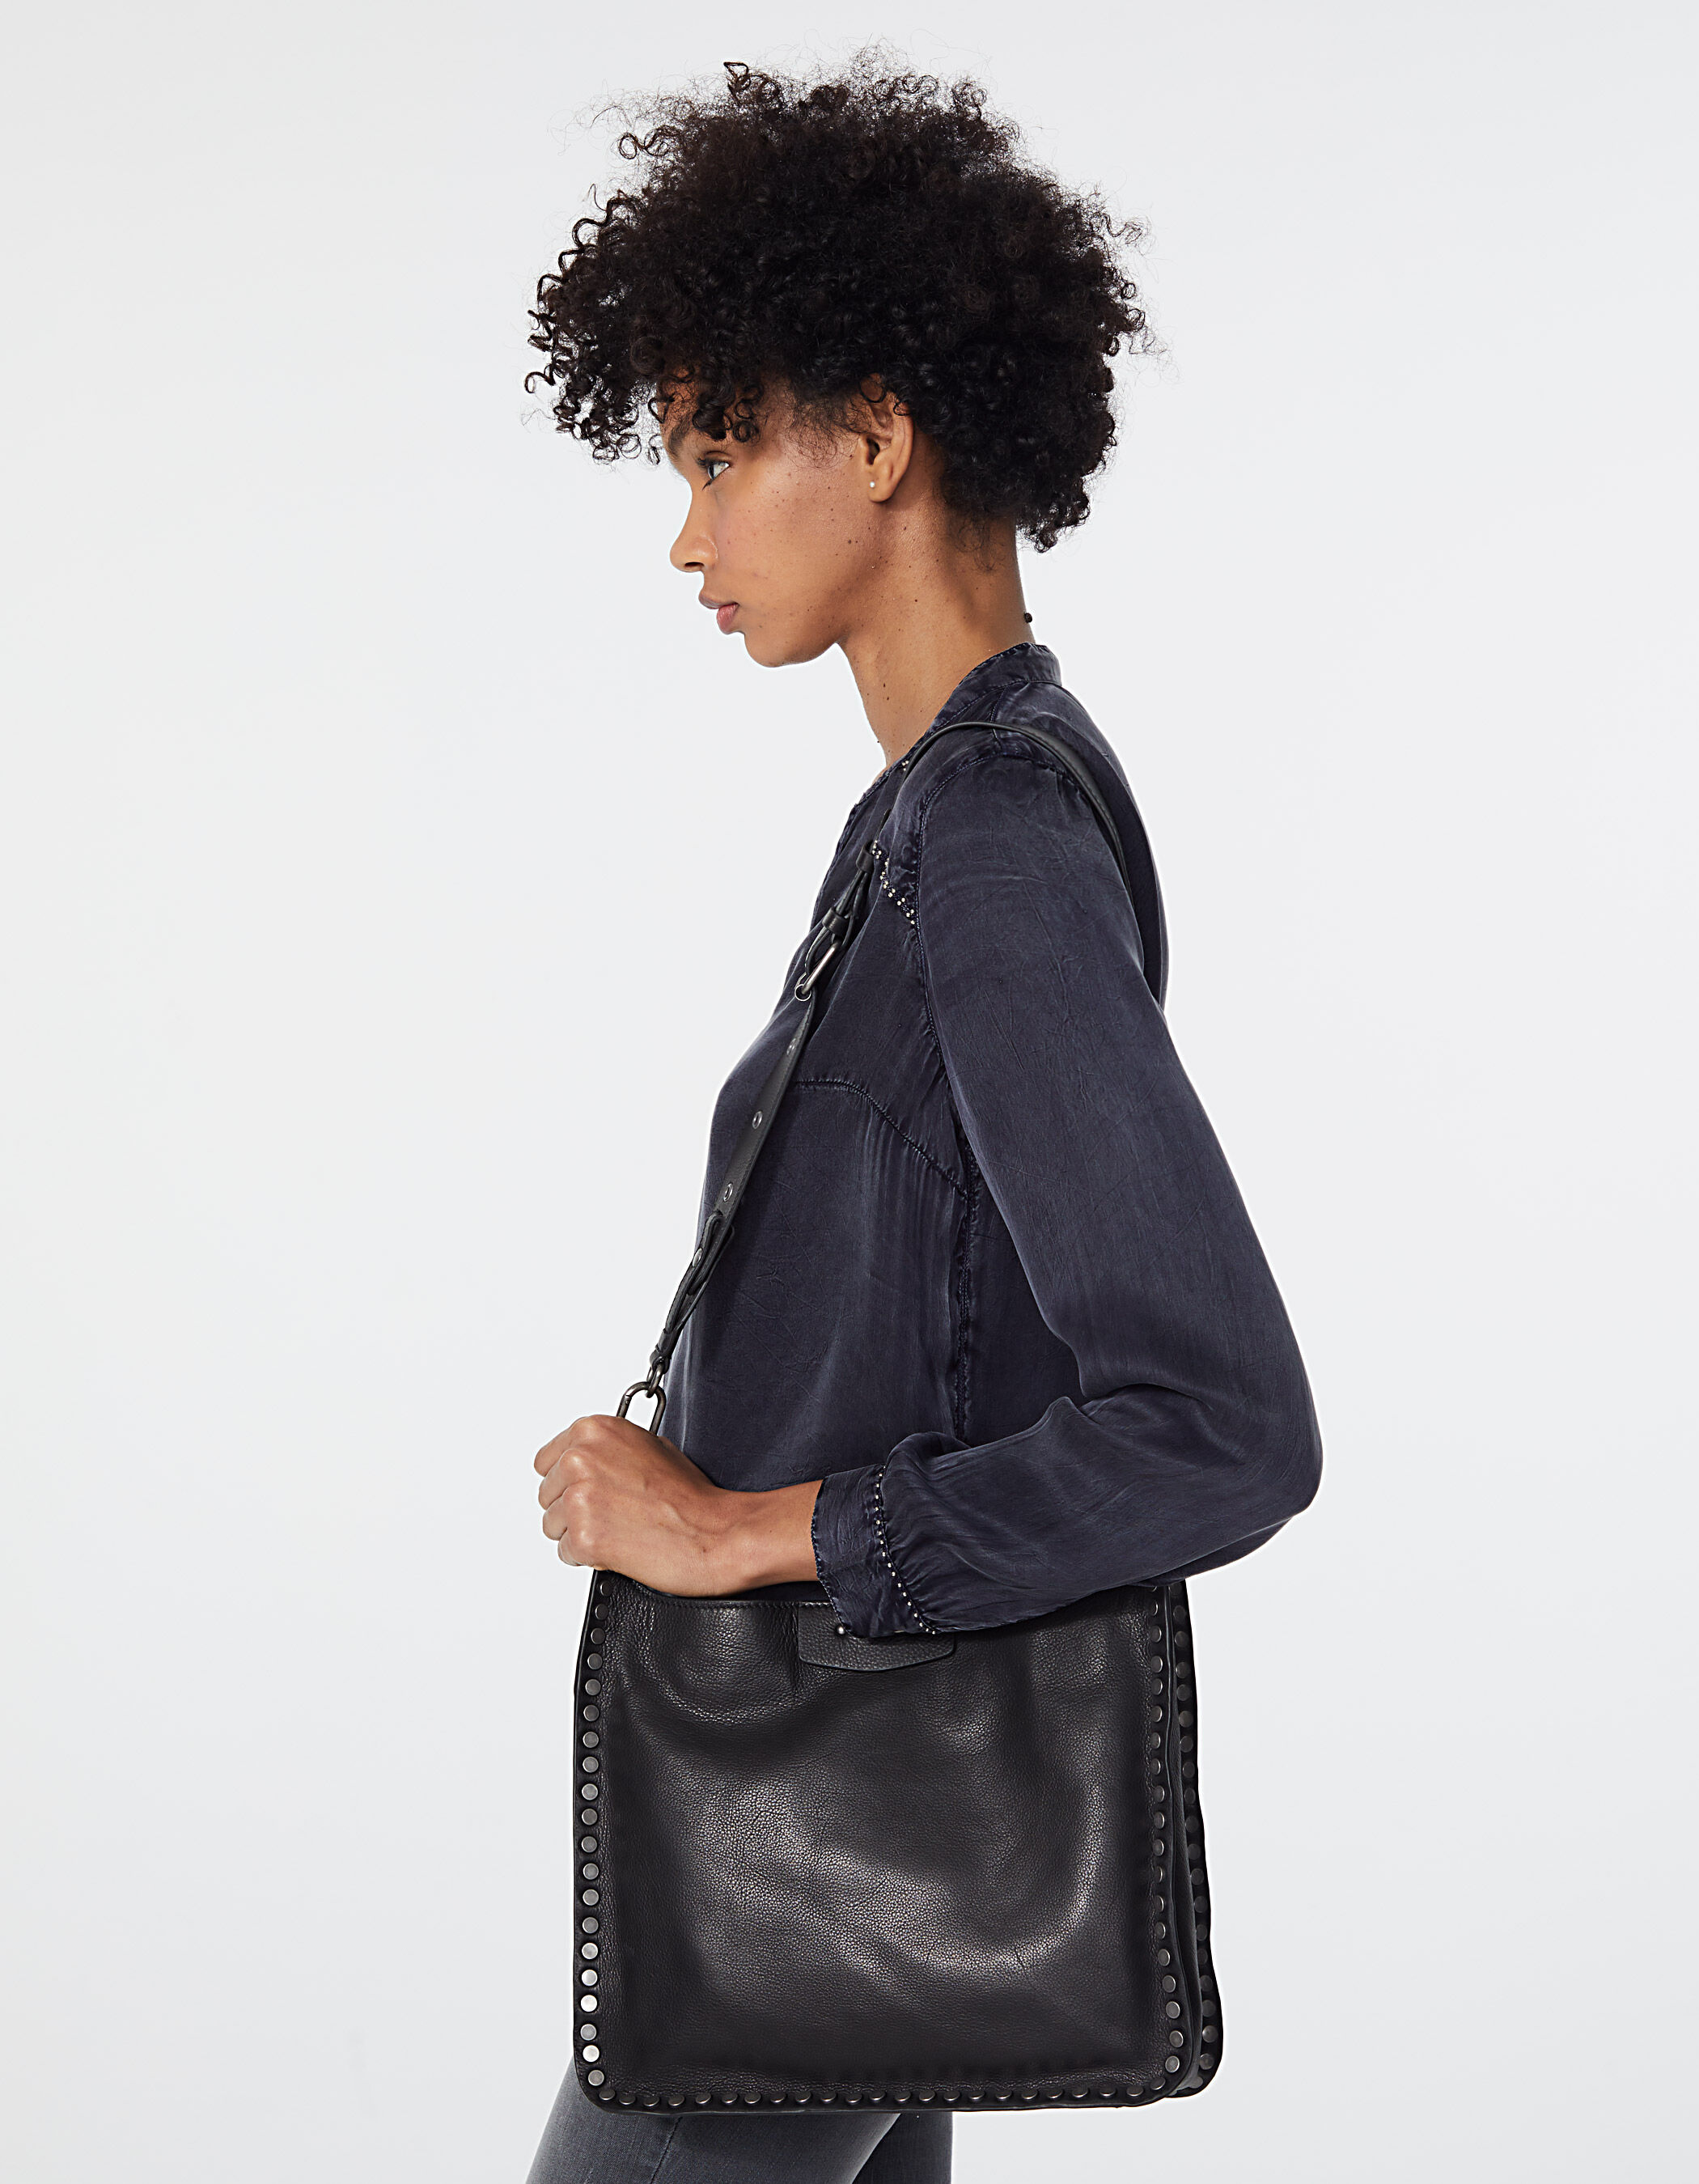 Guess purse bag satchel black studded leather | Guess purses, Studded  leather, Black studded